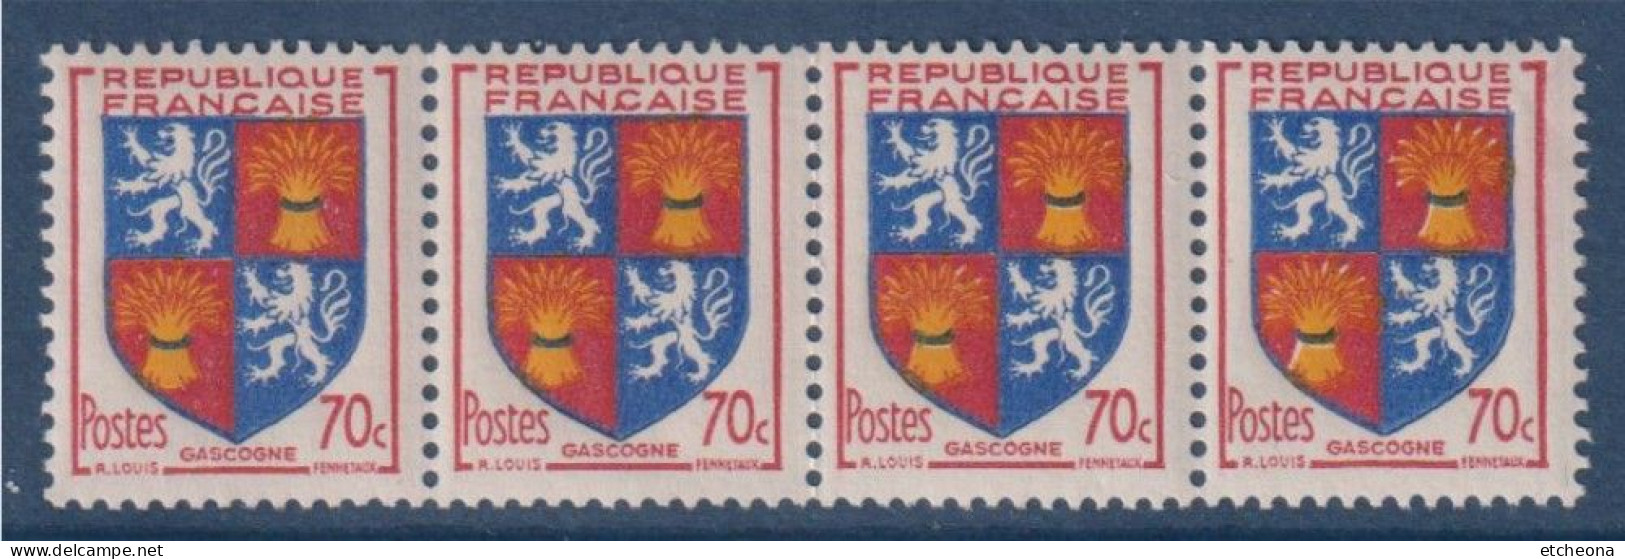 Gascogne Armoiries De Provinces VI N°958 Bande De 4 Timbres Neufs - 1941-66 Coat Of Arms And Heraldry